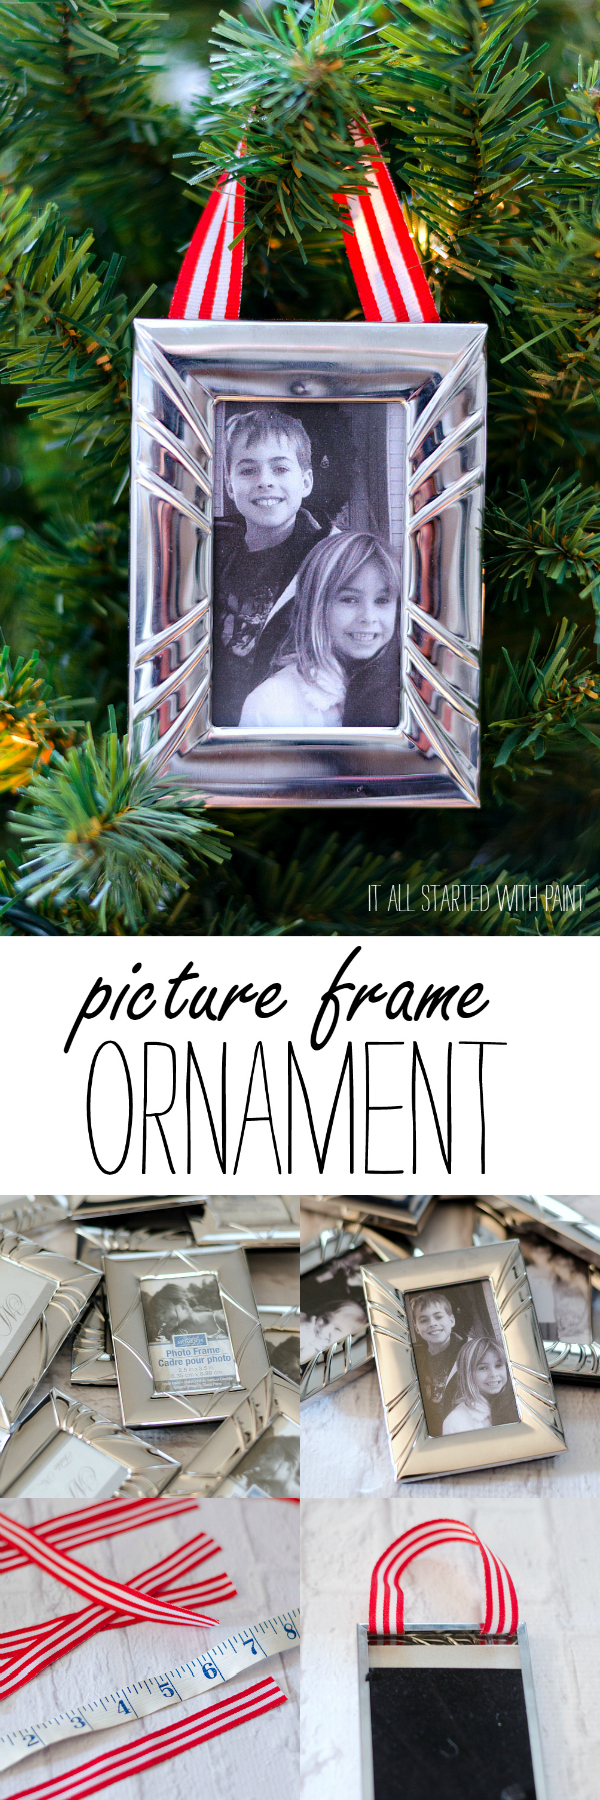 Picture Frame Ornament: Handmade Christmas Craft Ideas